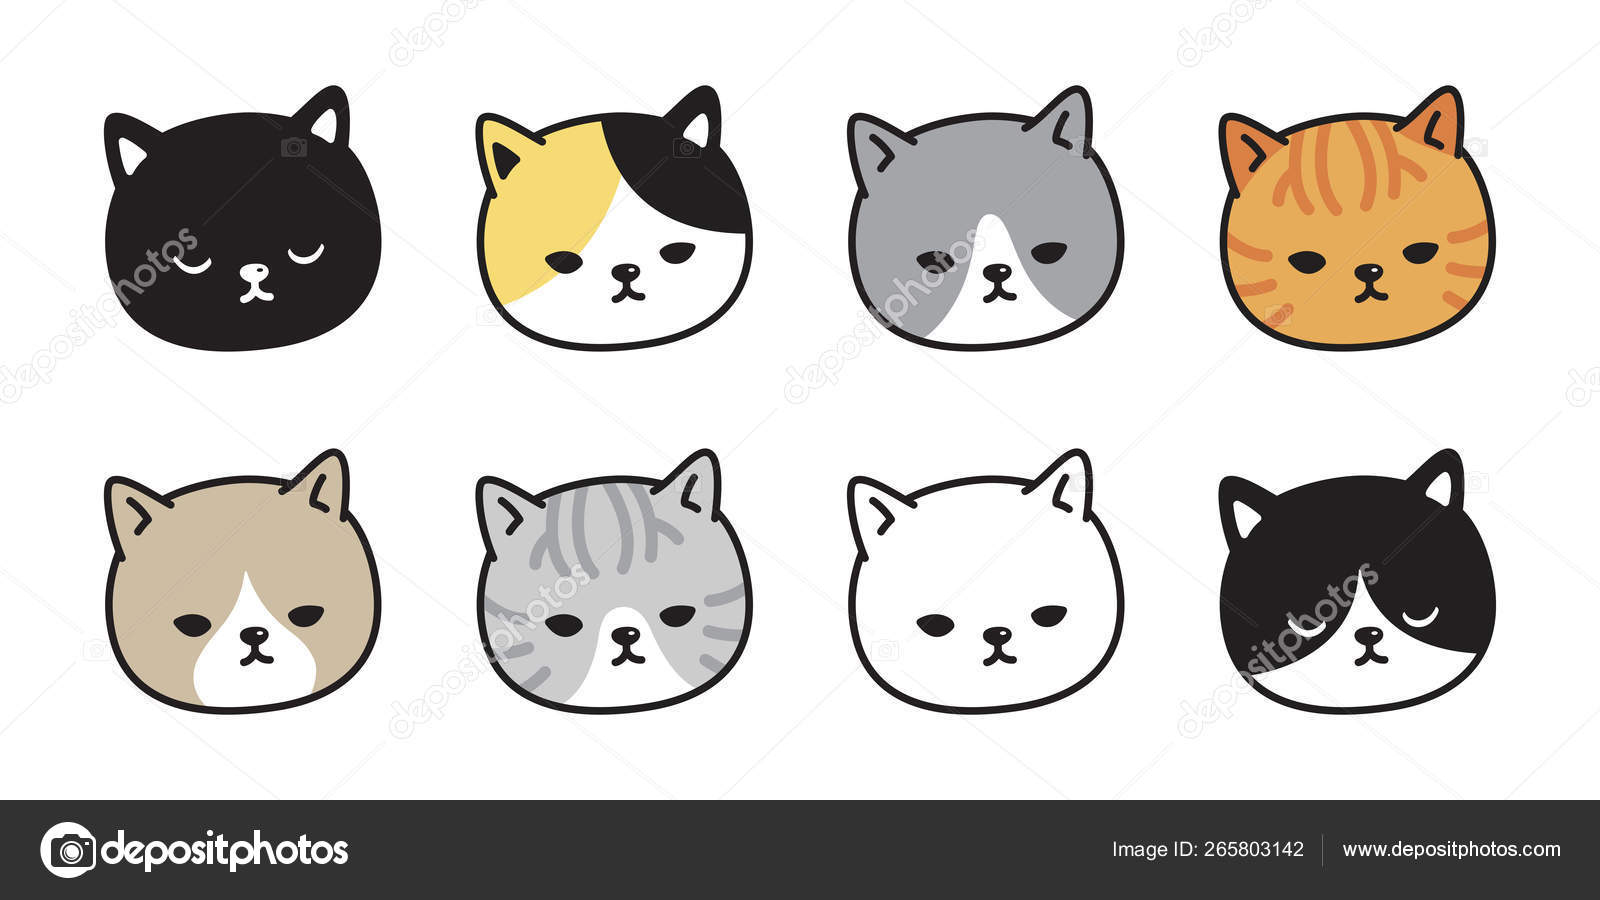 Cat icon cartoon